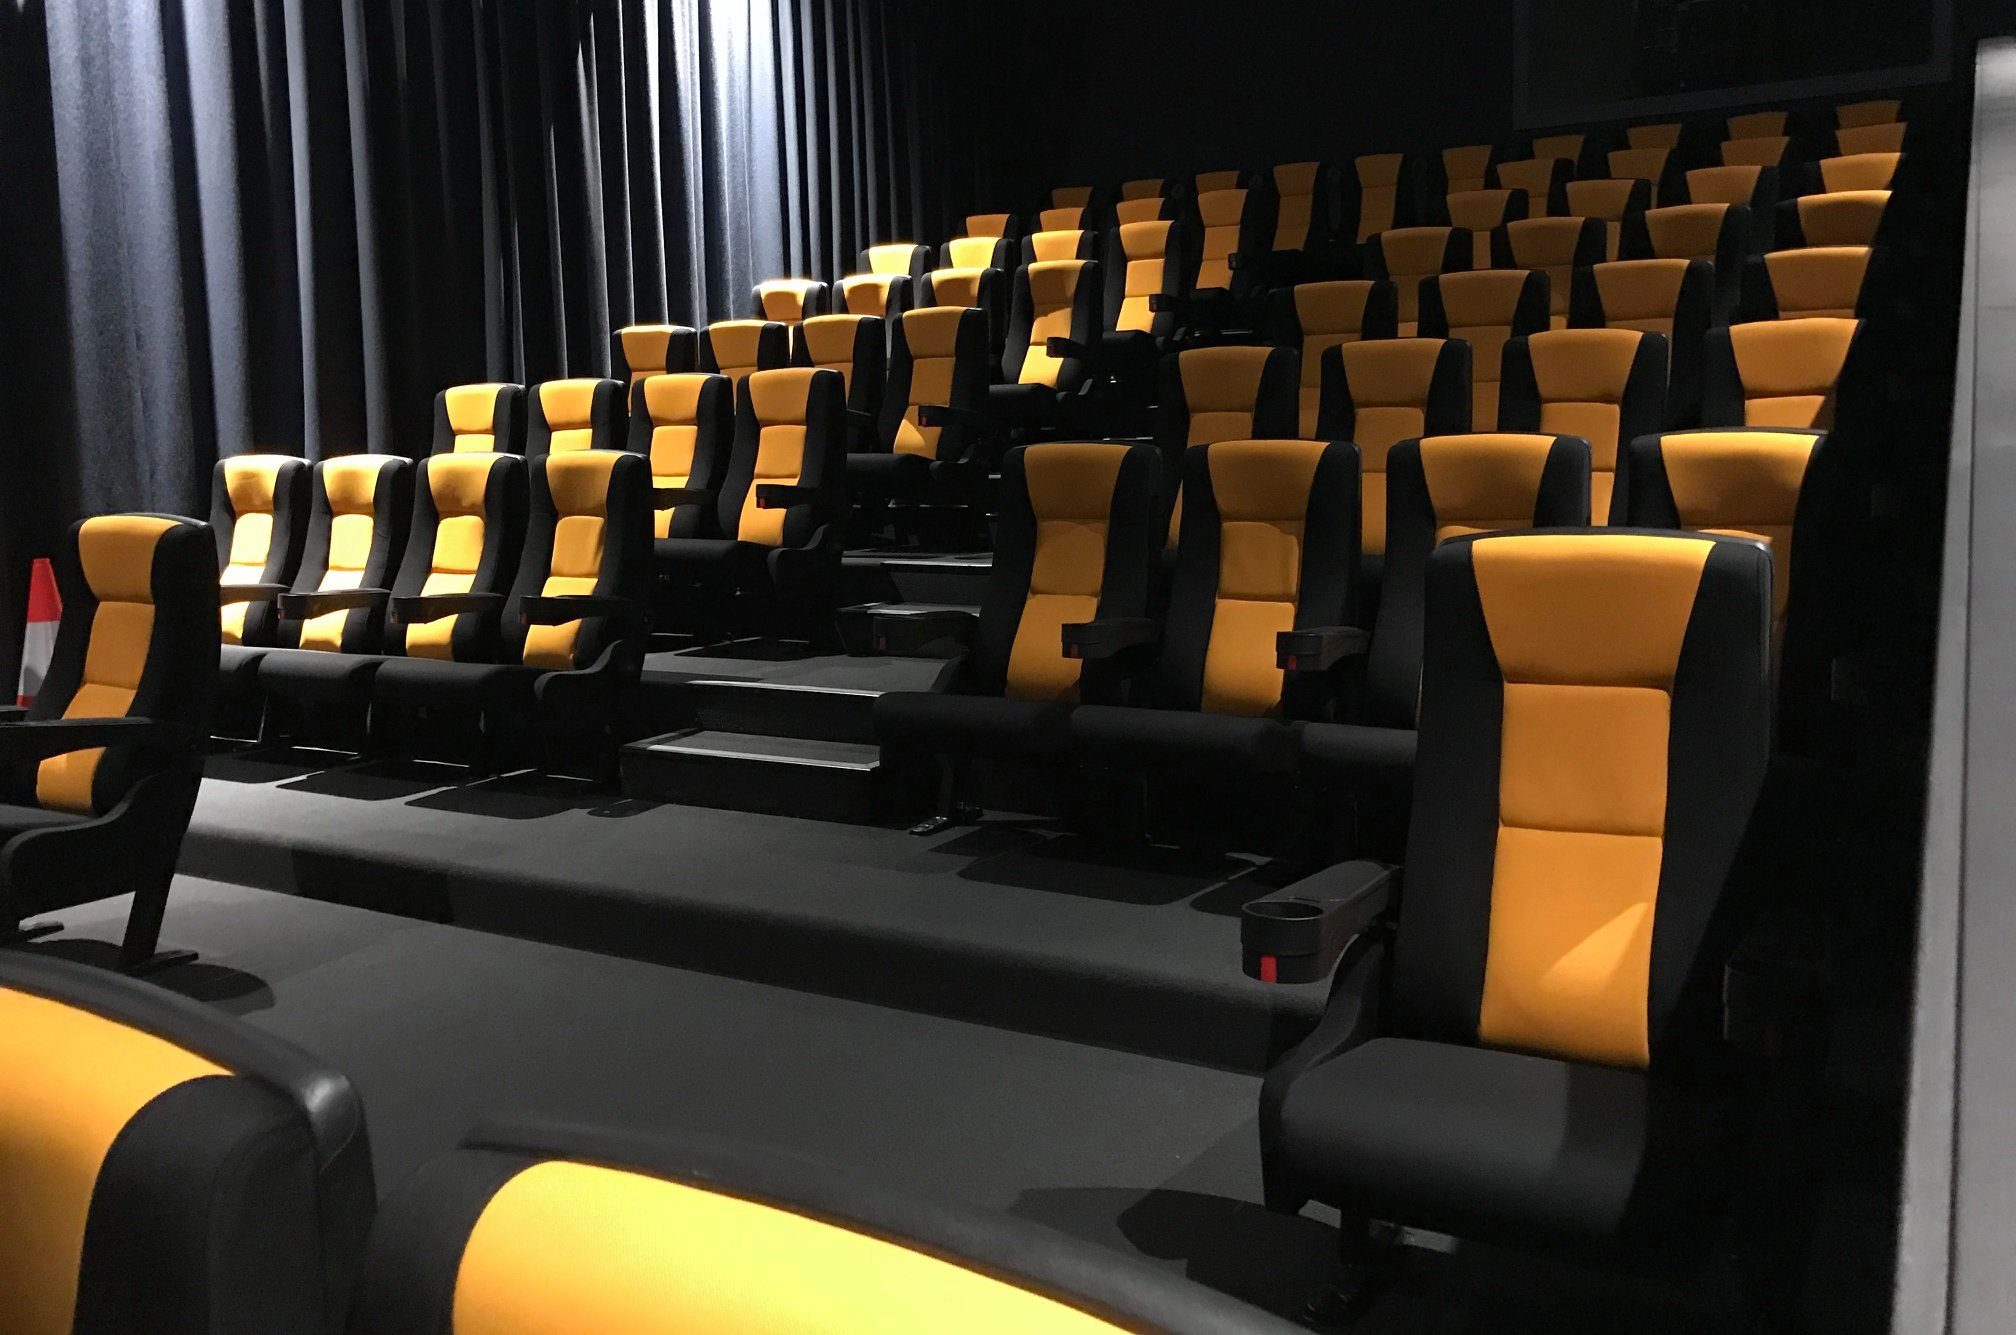 The Crossing Theatre’s cinema upgrades almost complete